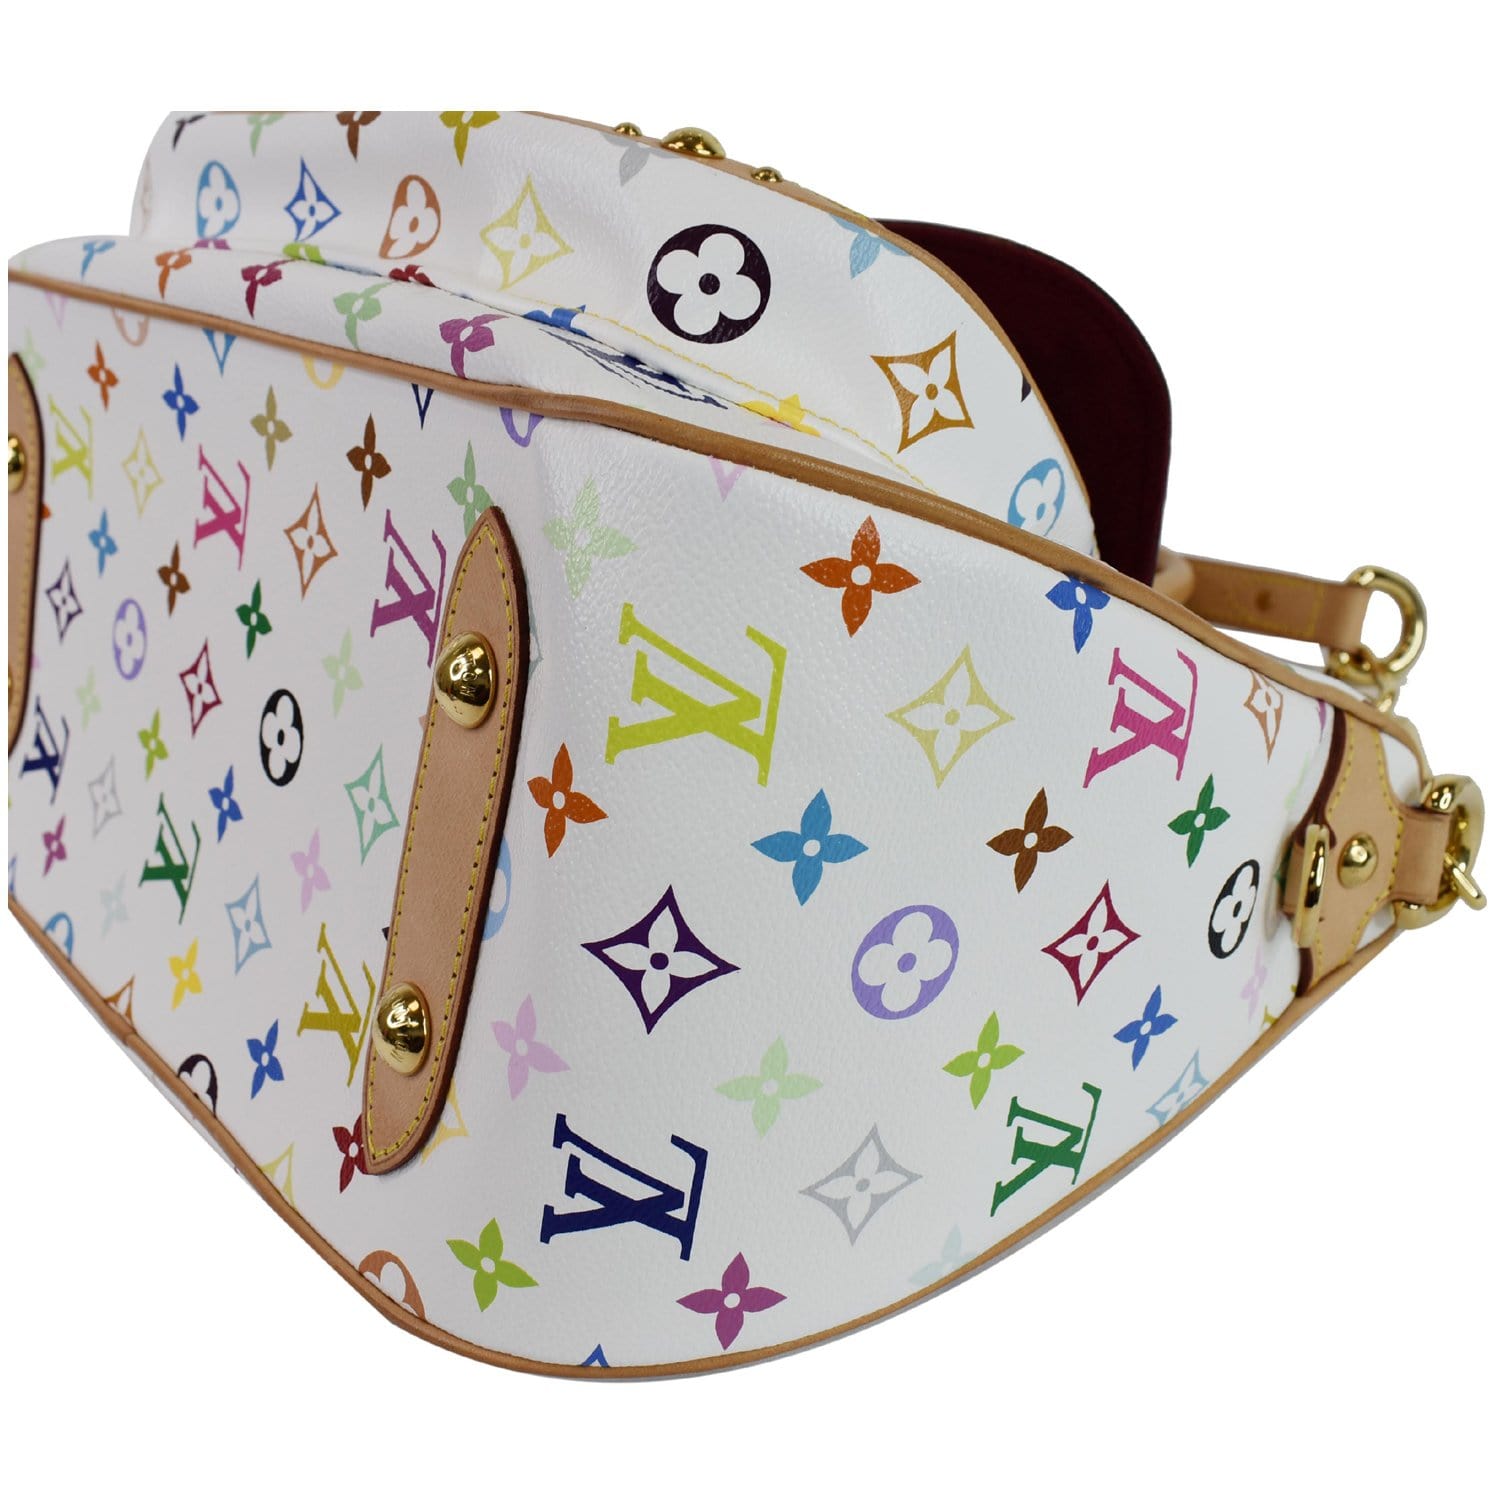 Bag Multicolor Pochette Accessoires White Pouch Shoulder Size:22*13CM V 210  ++++ From Goodcoolbag1, $19.16